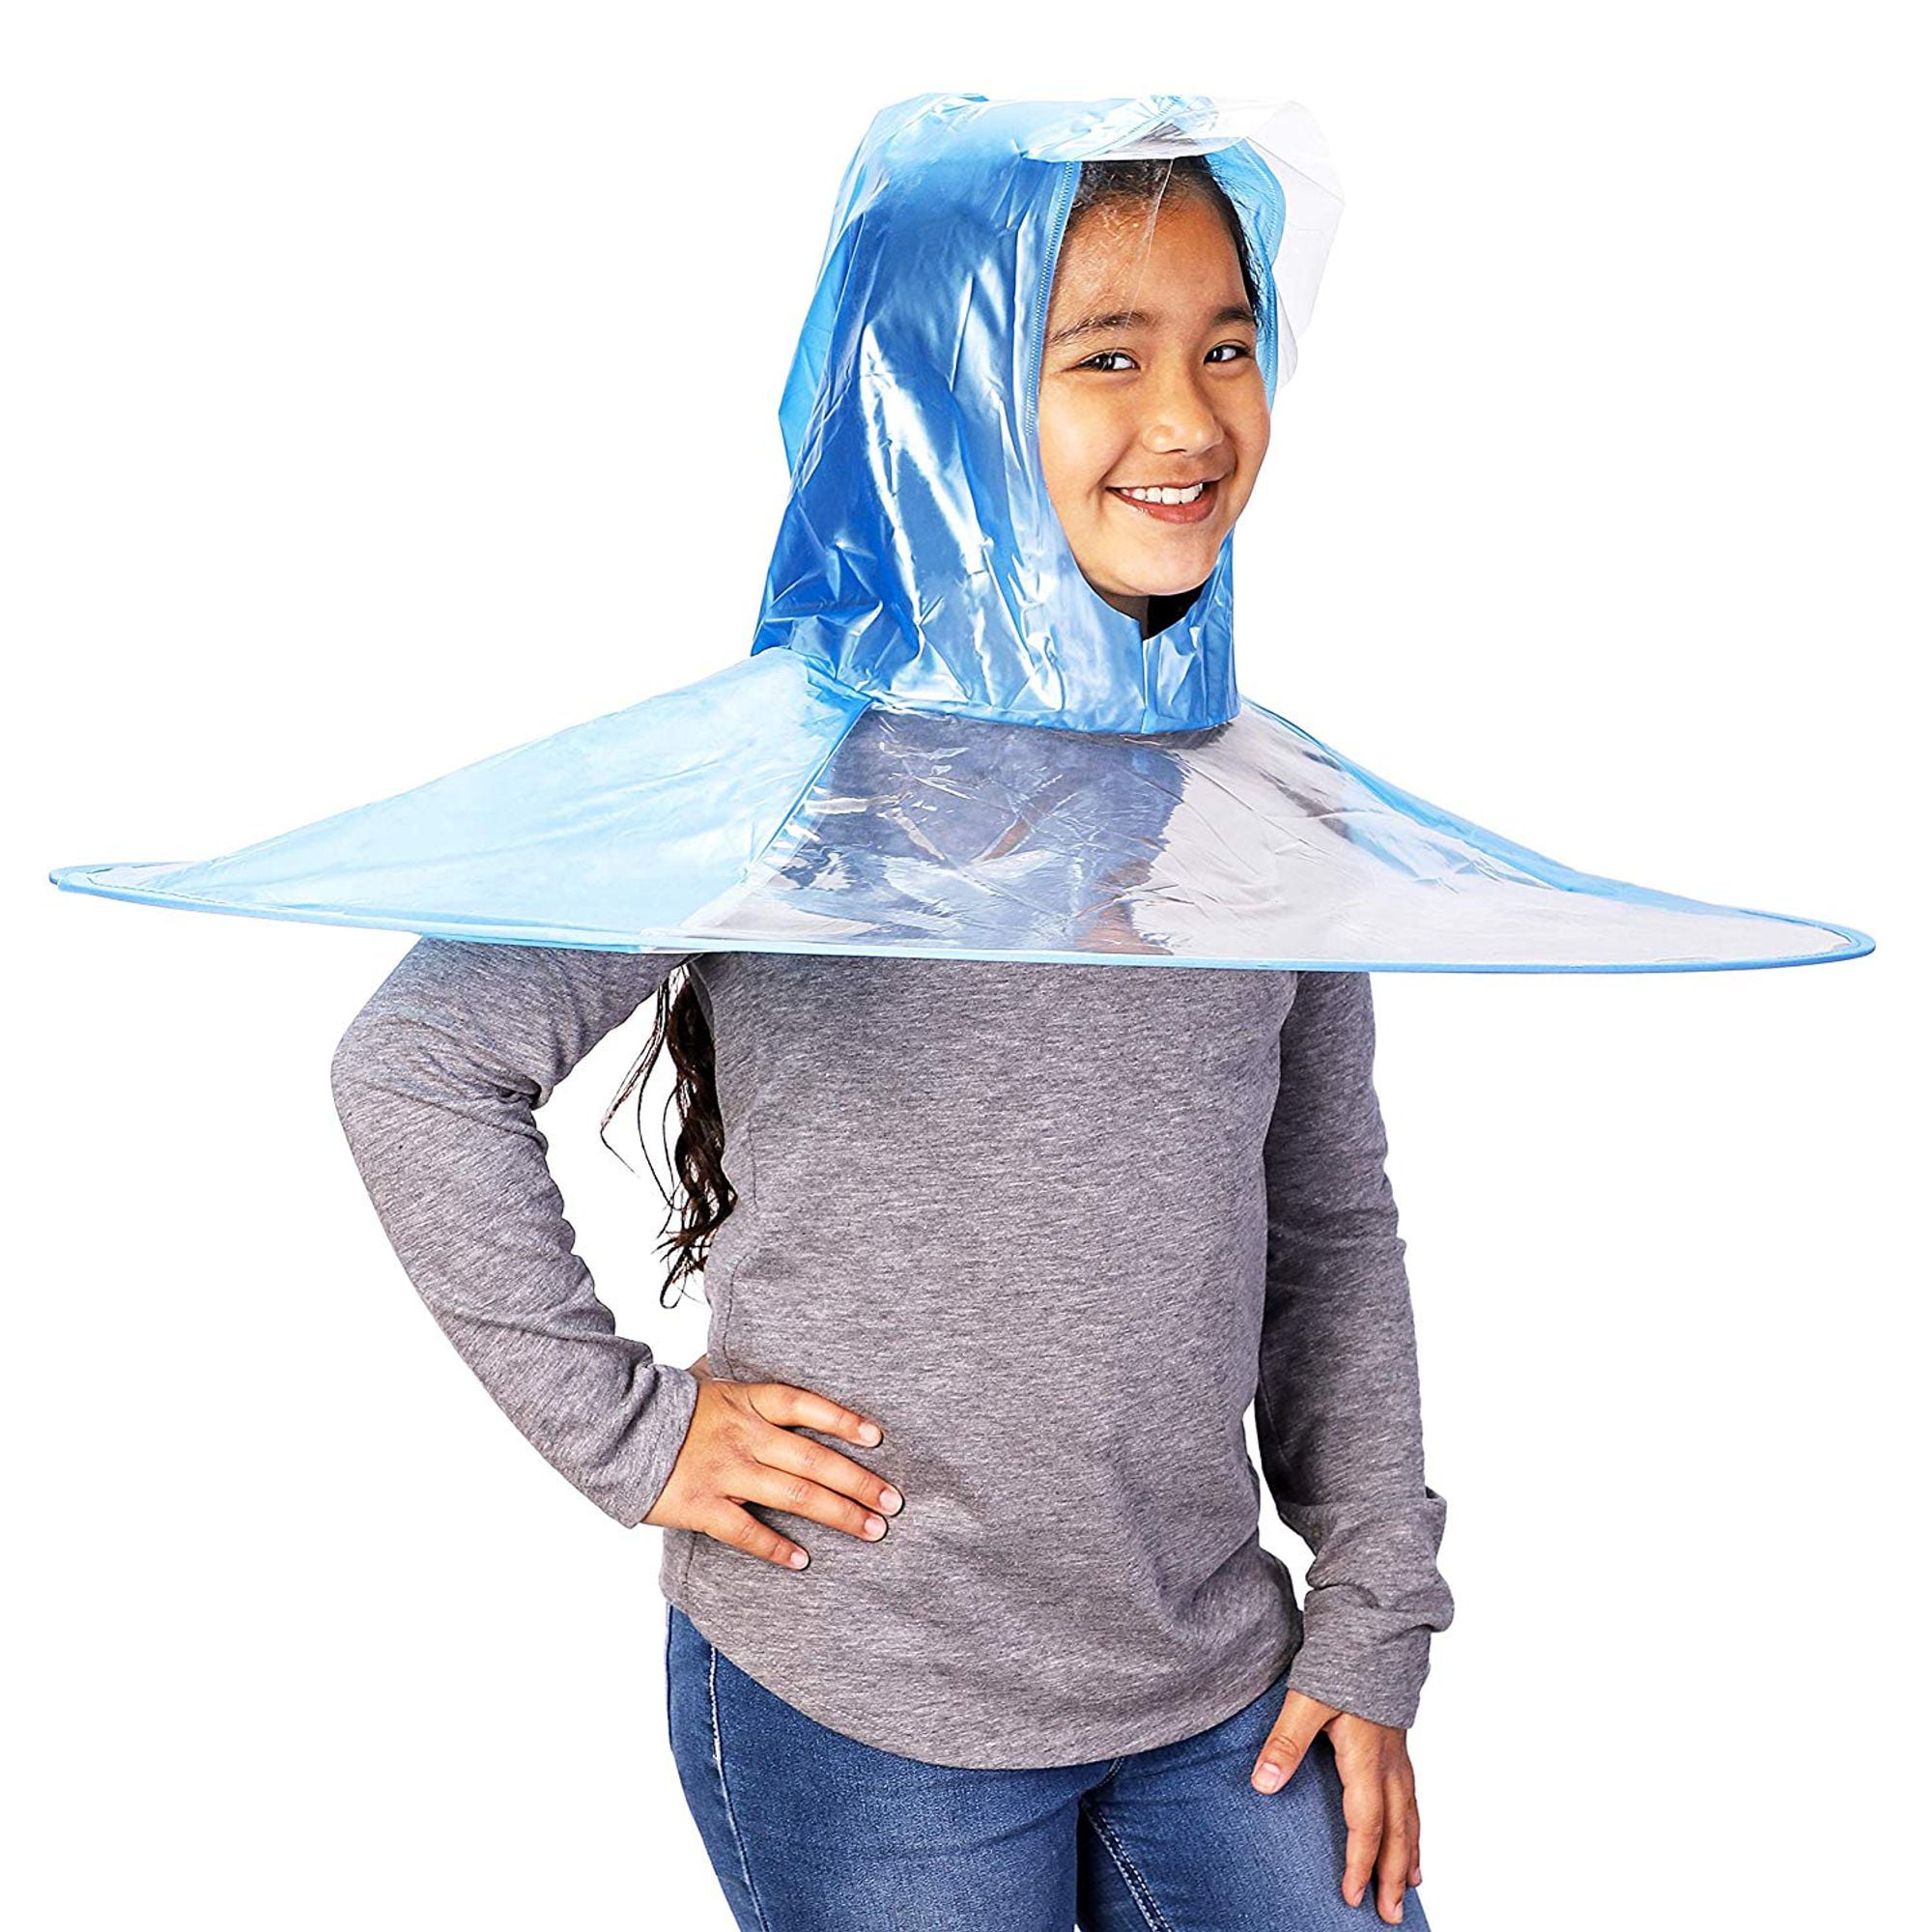 Pvc protection umbrella hat